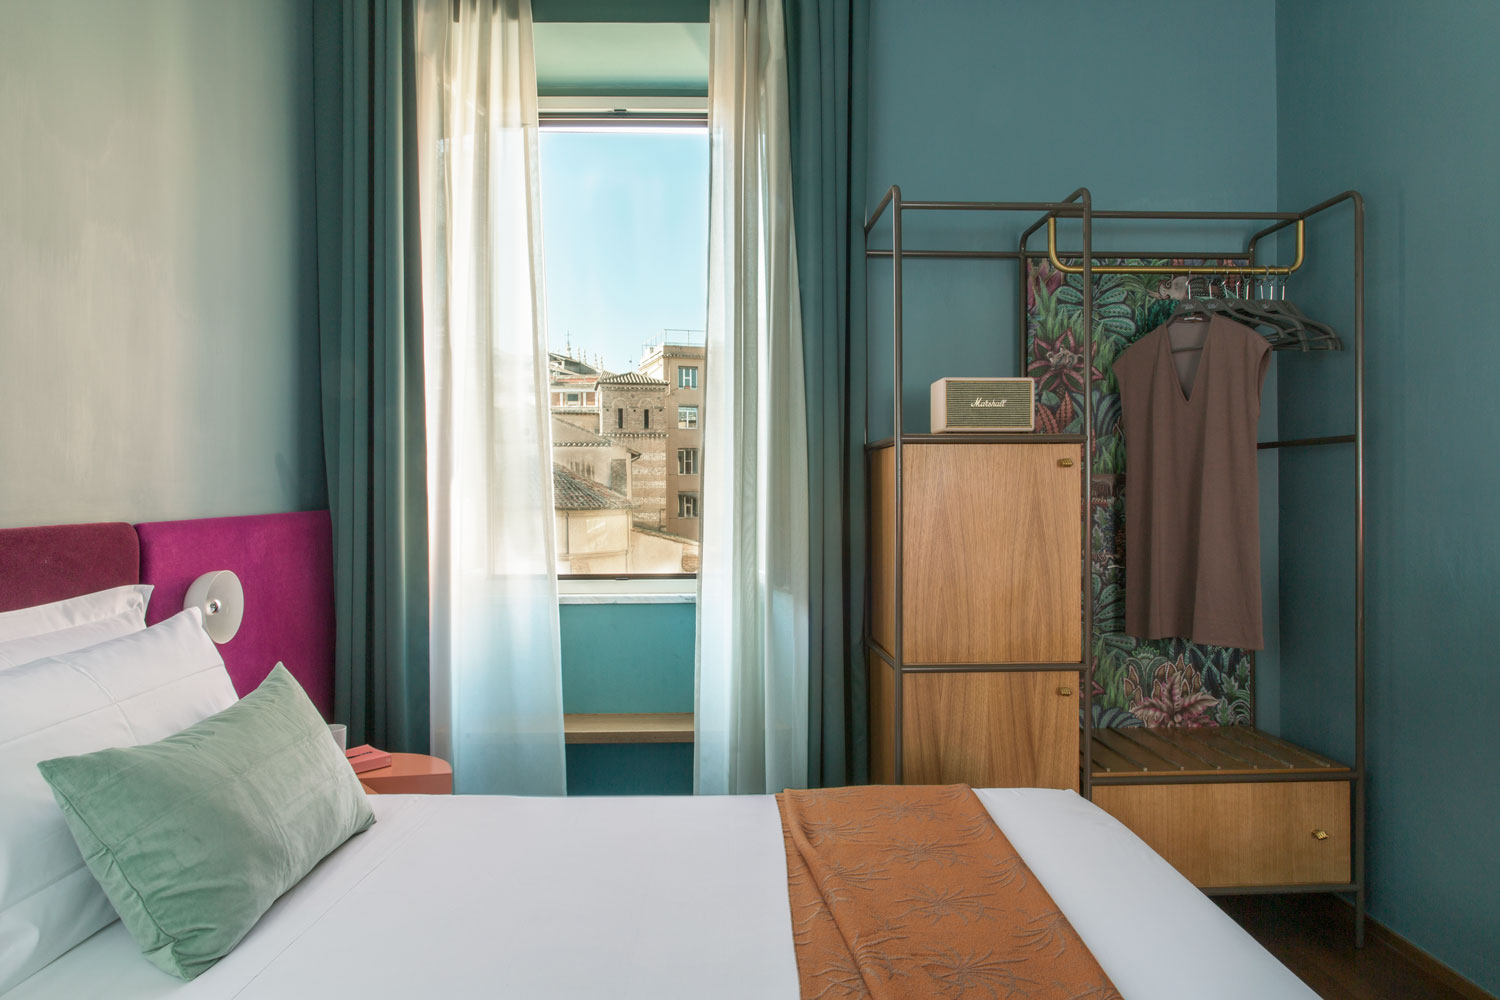 Redefining Hospitality Design With This Vibrant Hotel In Rome - WWW.AUTHENTICINTERIOR.COM design studio & blog